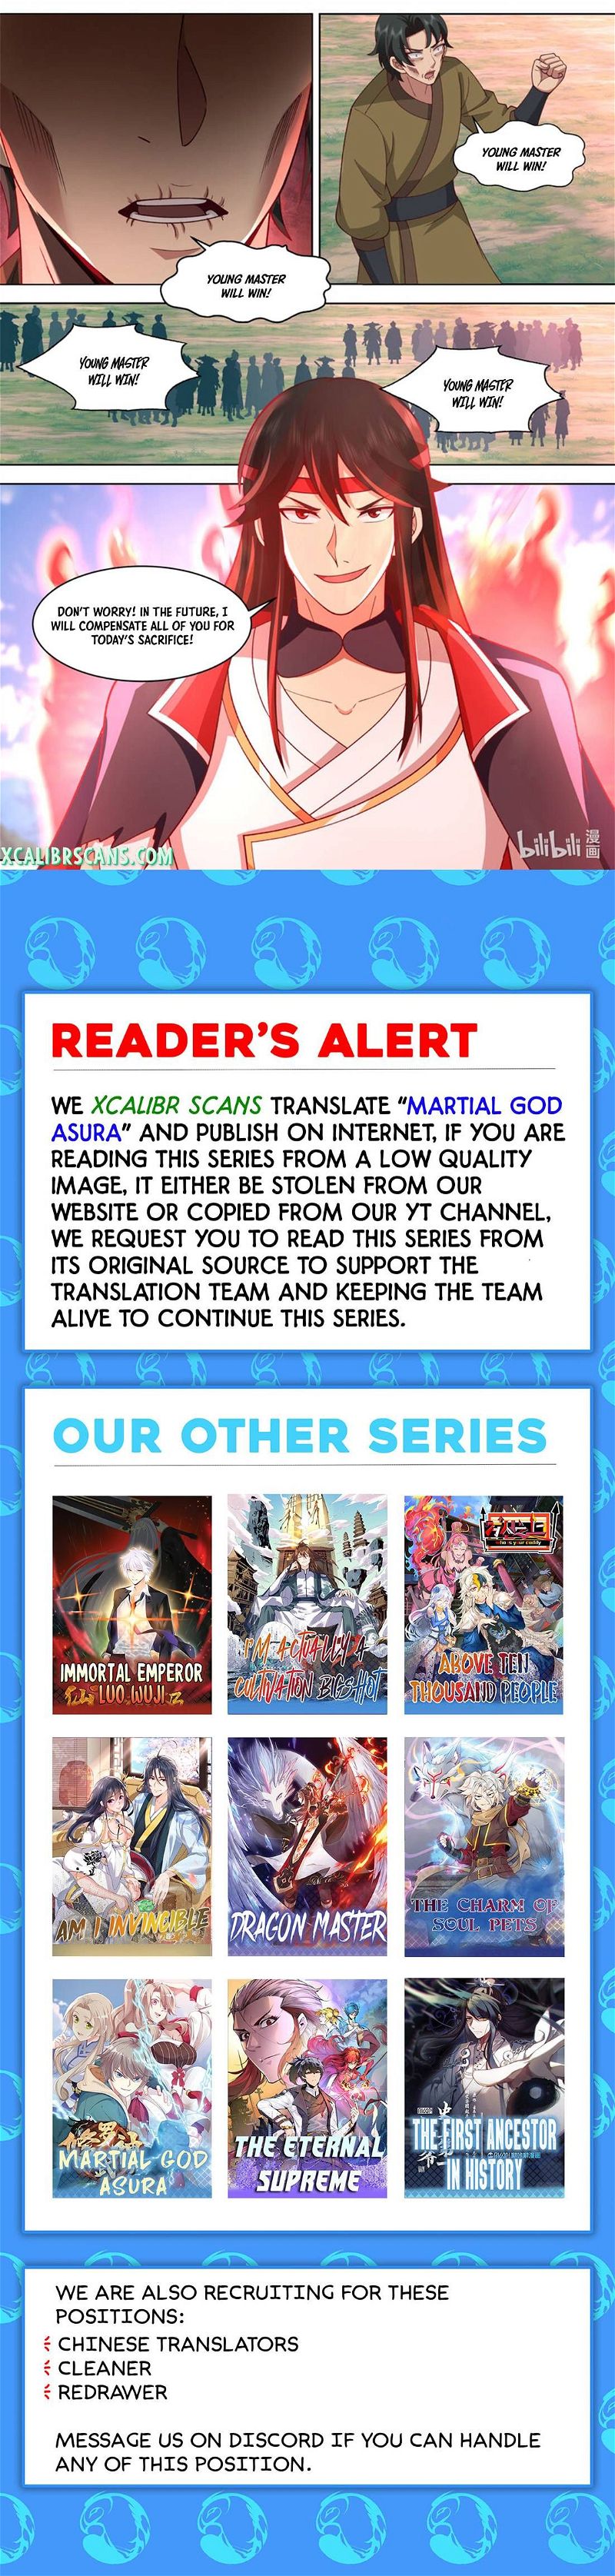 Martial God Asura Chapter 569 page 10